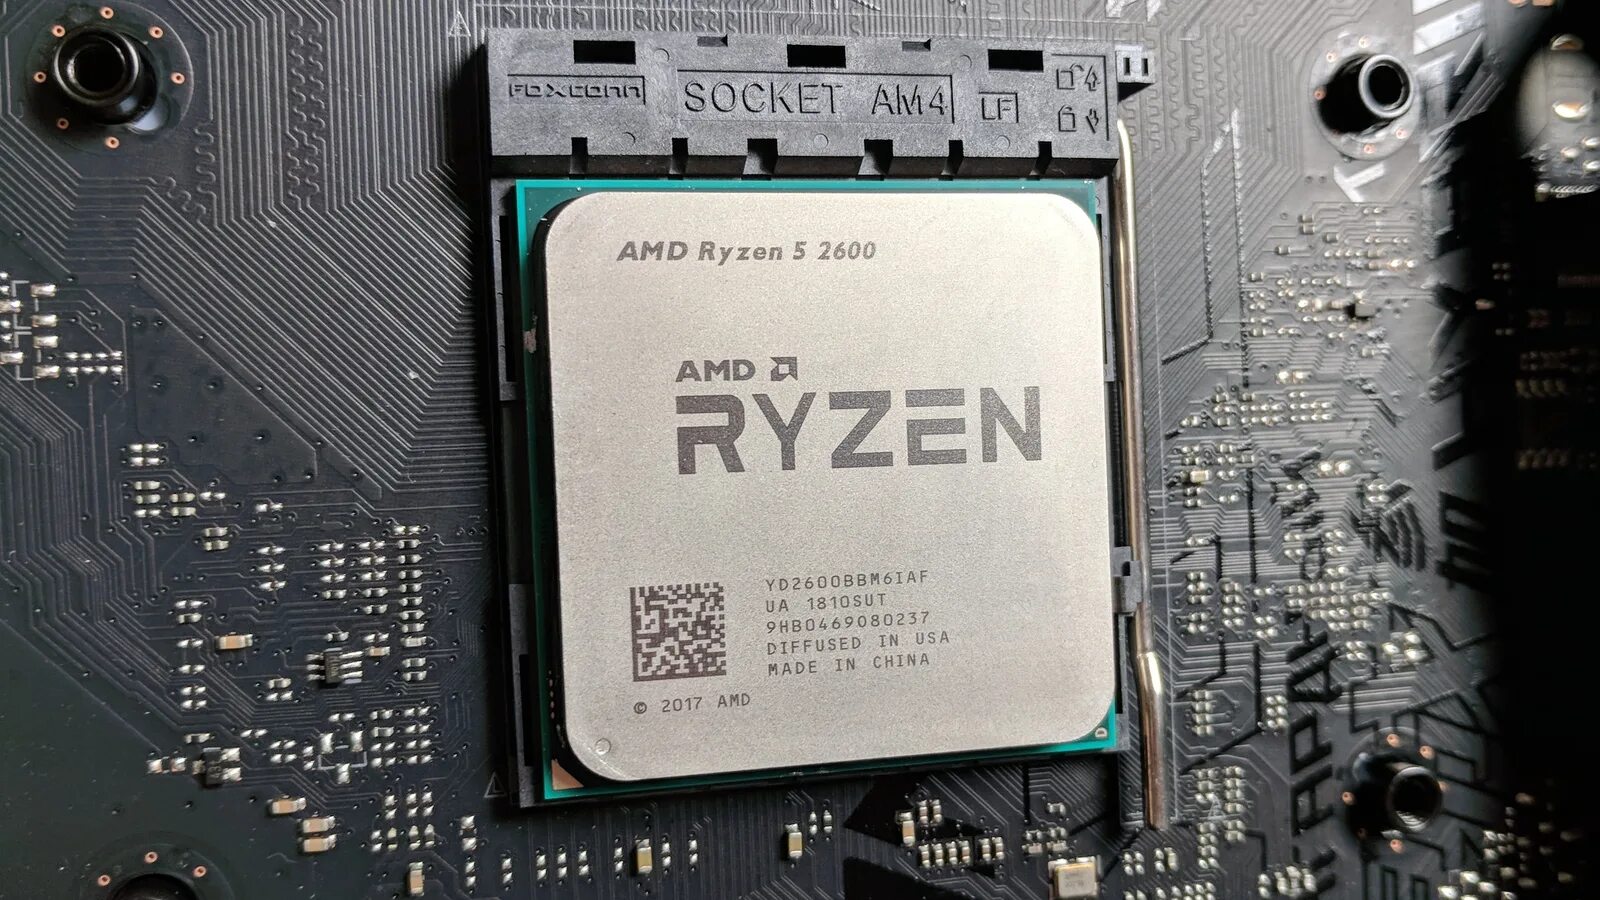 AMD Ryzen 5 2600. Процессор AMD Ryzen 5 2600x. Процессор AMD Ryzen 5 2600 am4. Ryzen 5 2500.